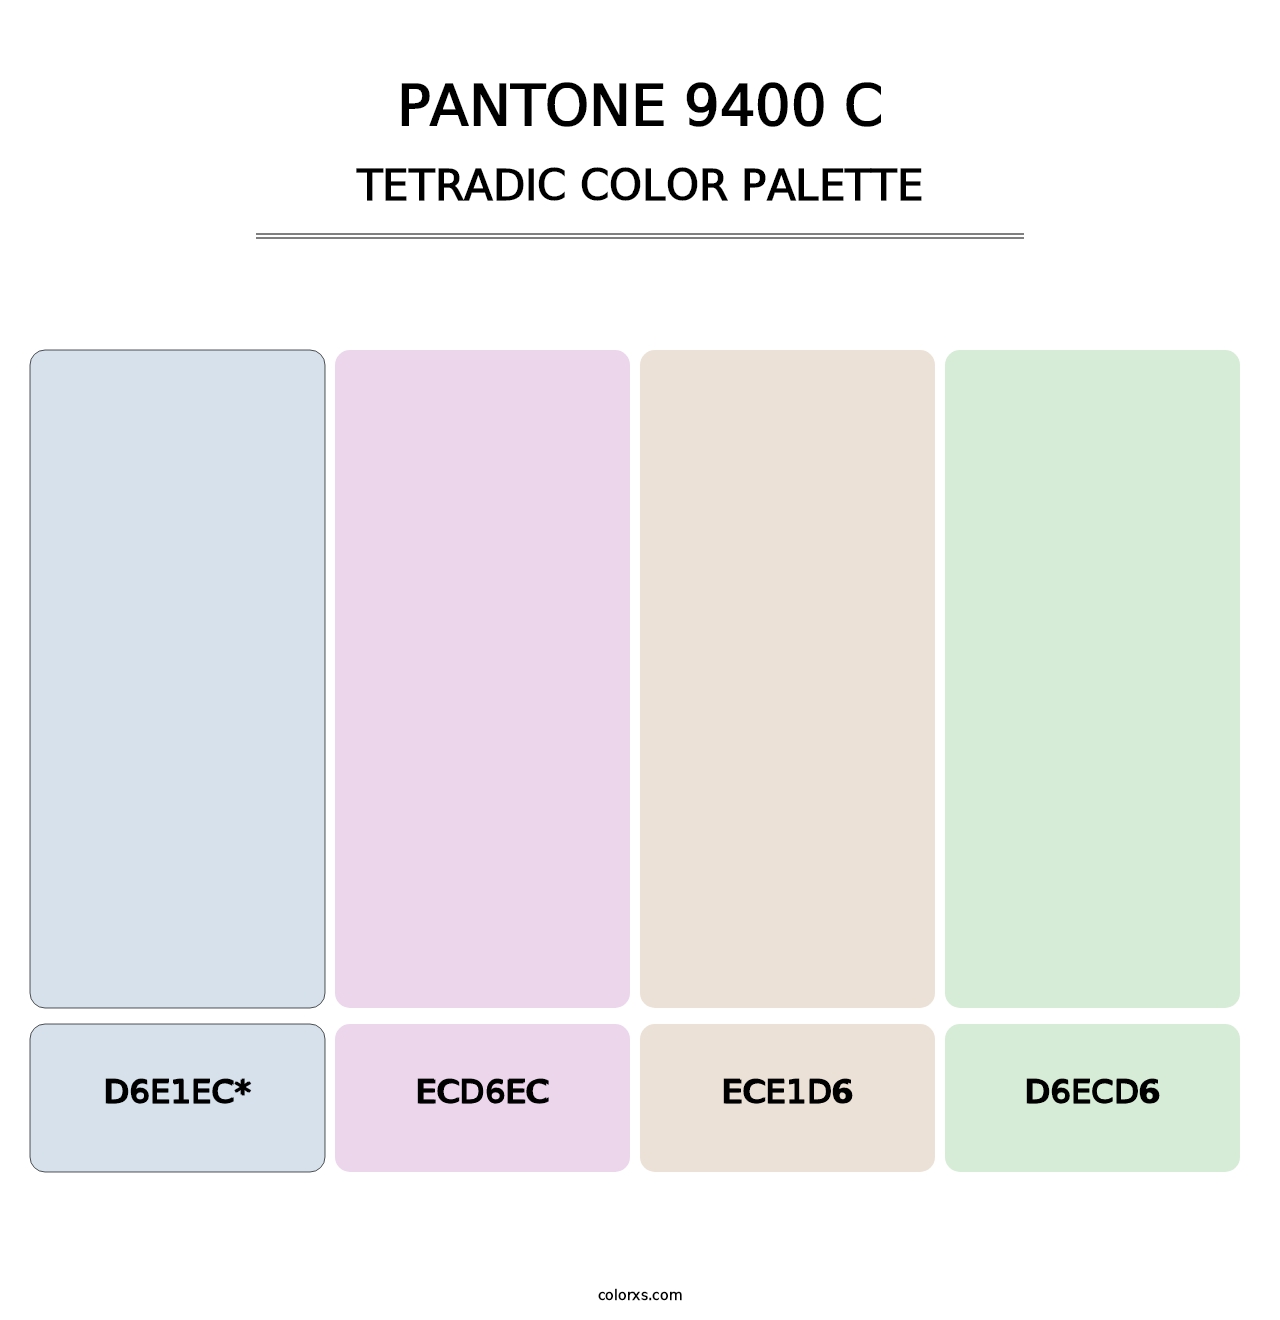 PANTONE 9400 C - Tetradic Color Palette